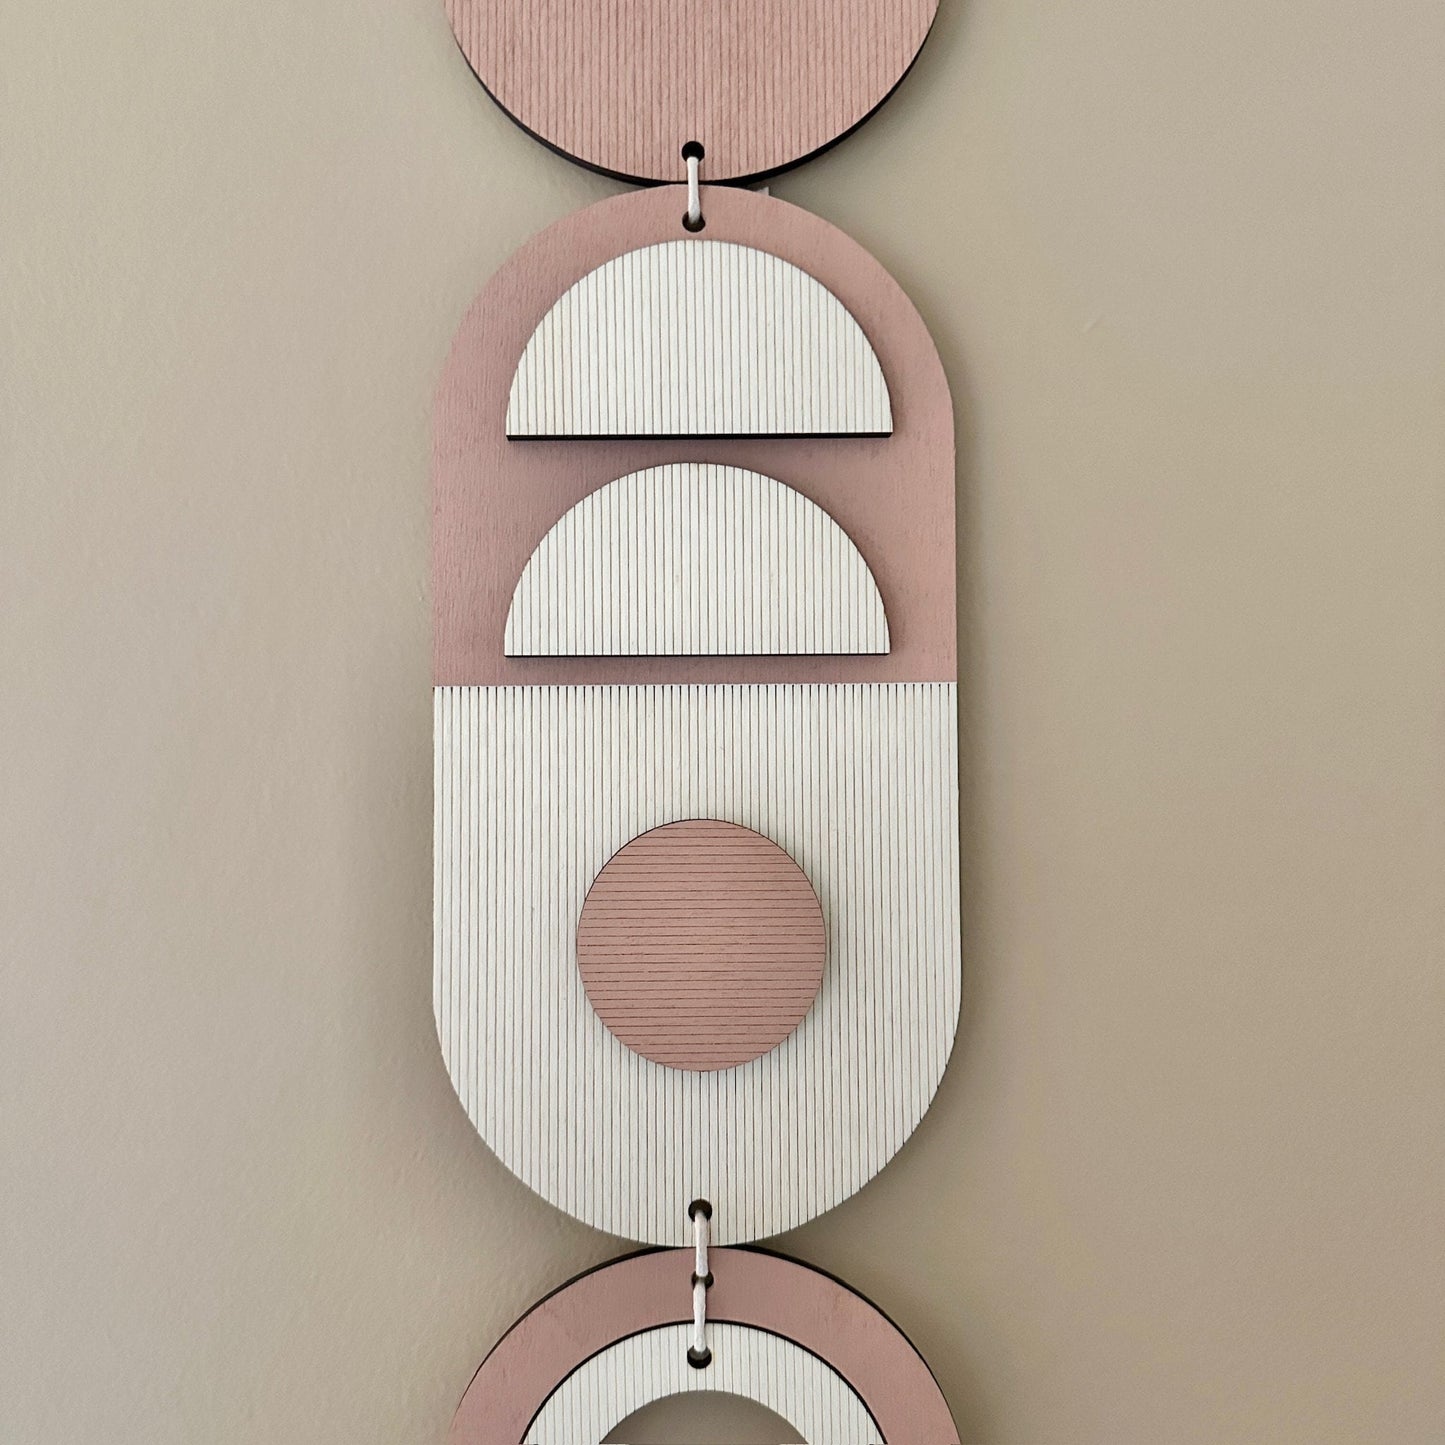 Dusky Pink Wall Hanging Gift - Geometric Wall Art - New Home Gift - Housewarming Present - Mid-Century Home Decor - Art Gifting